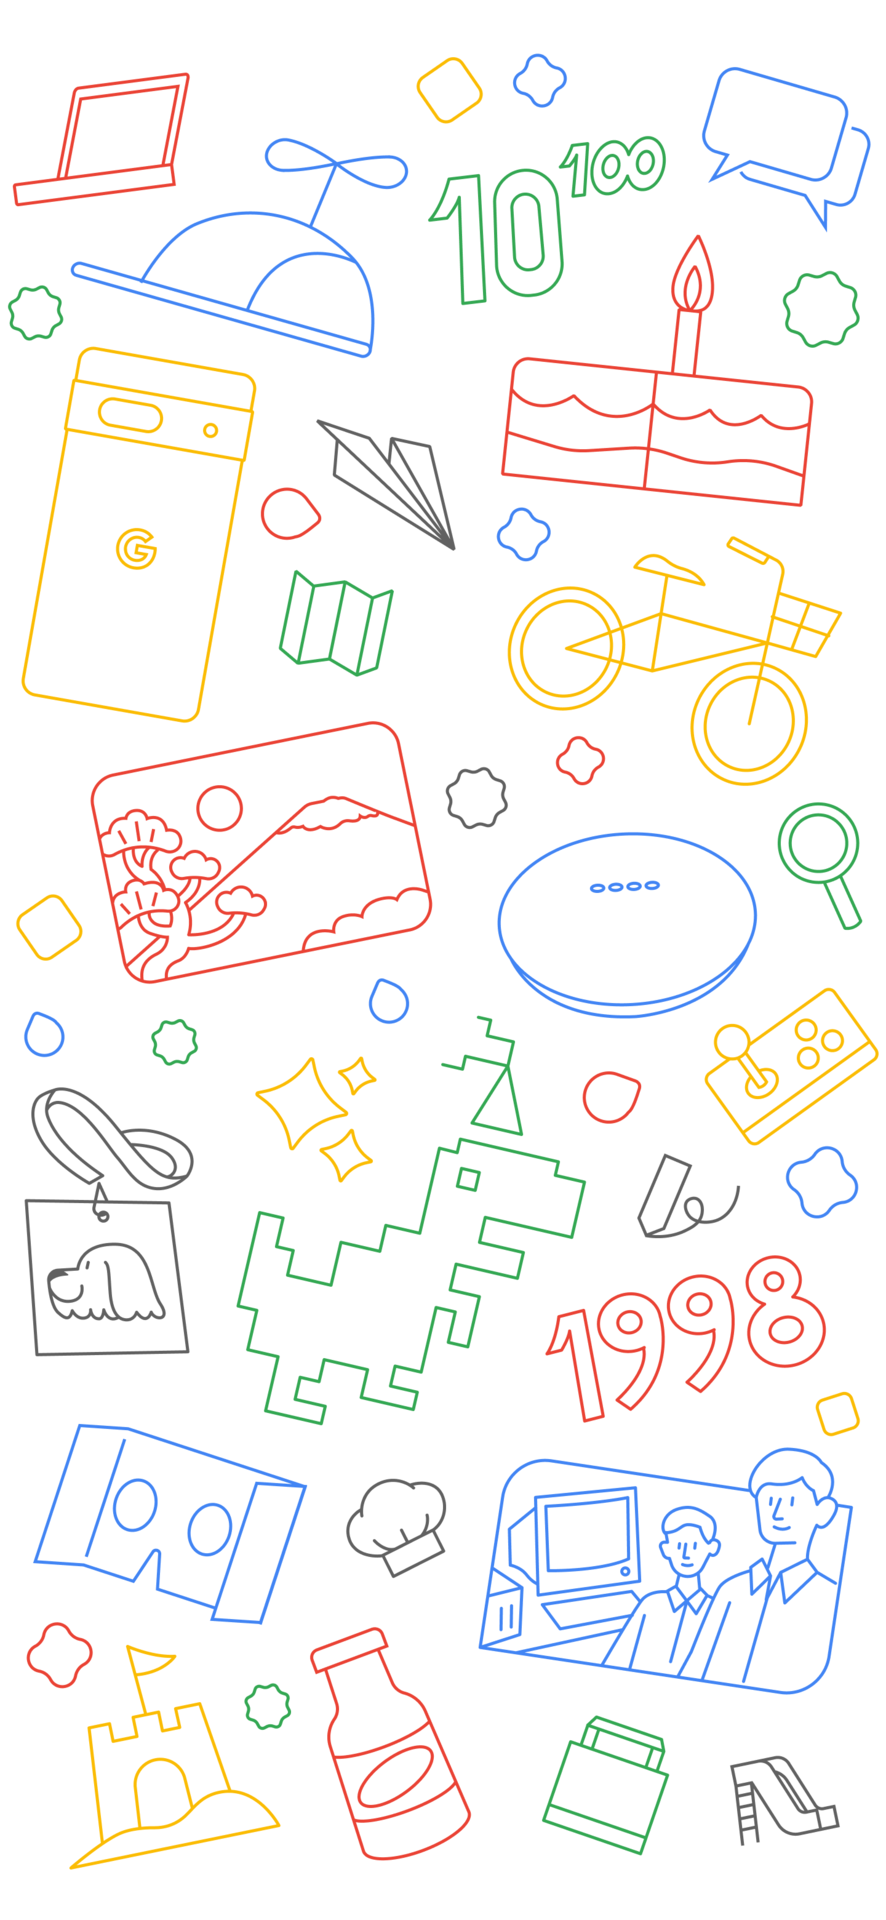 Google Wallpaper 25th Anniversary 1